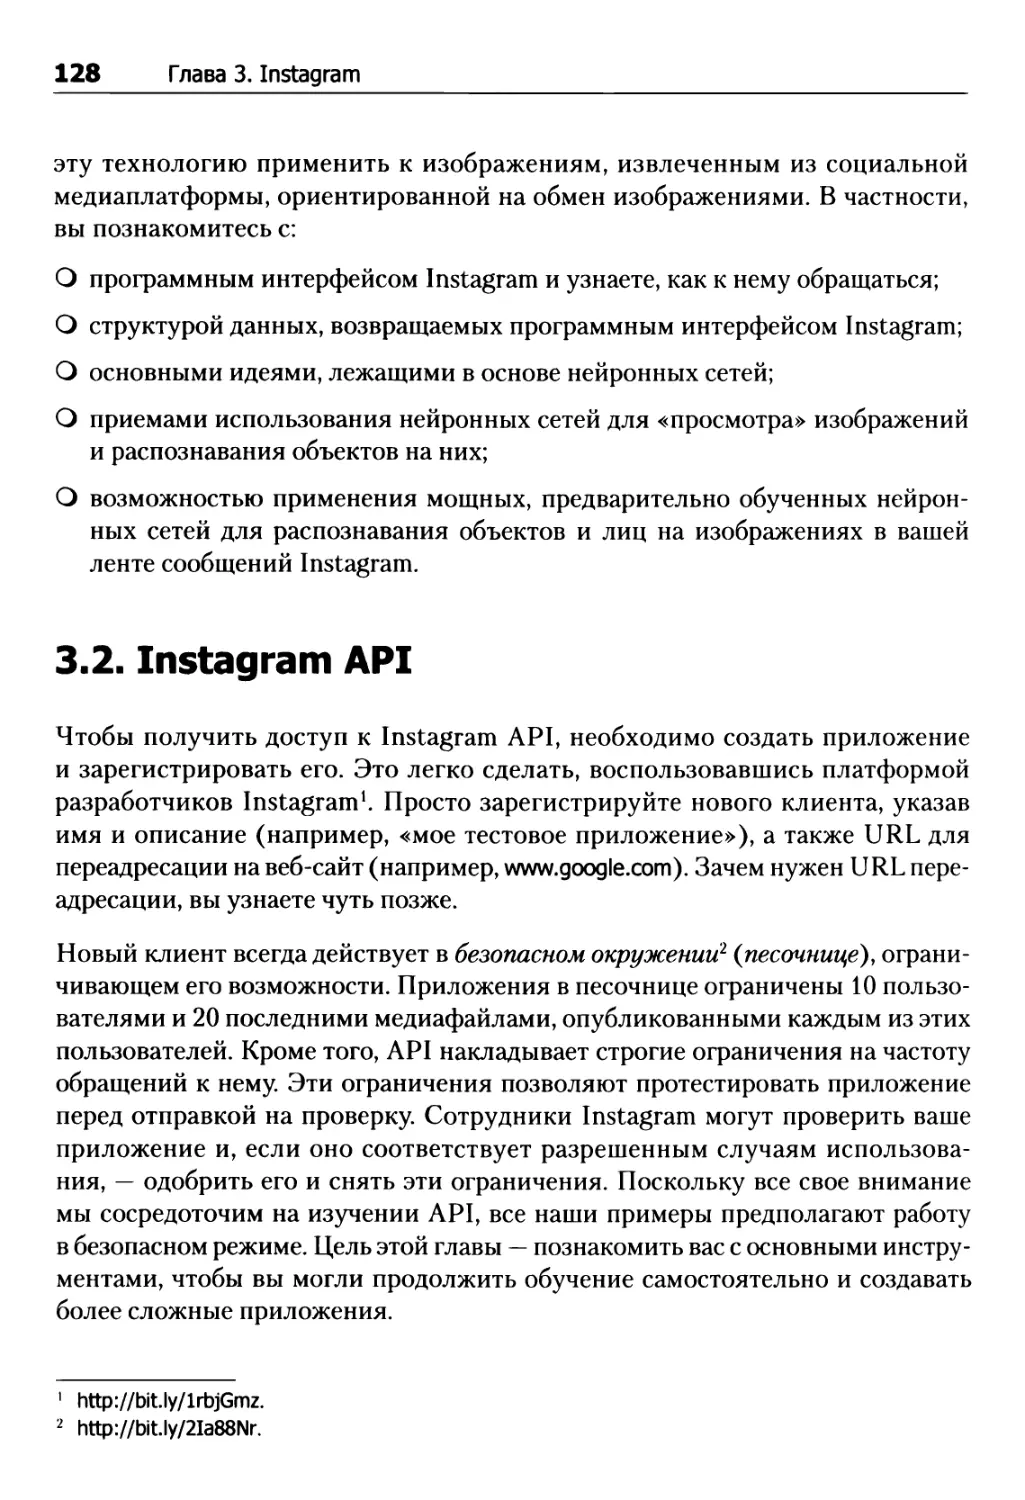 3.2. Instagram API